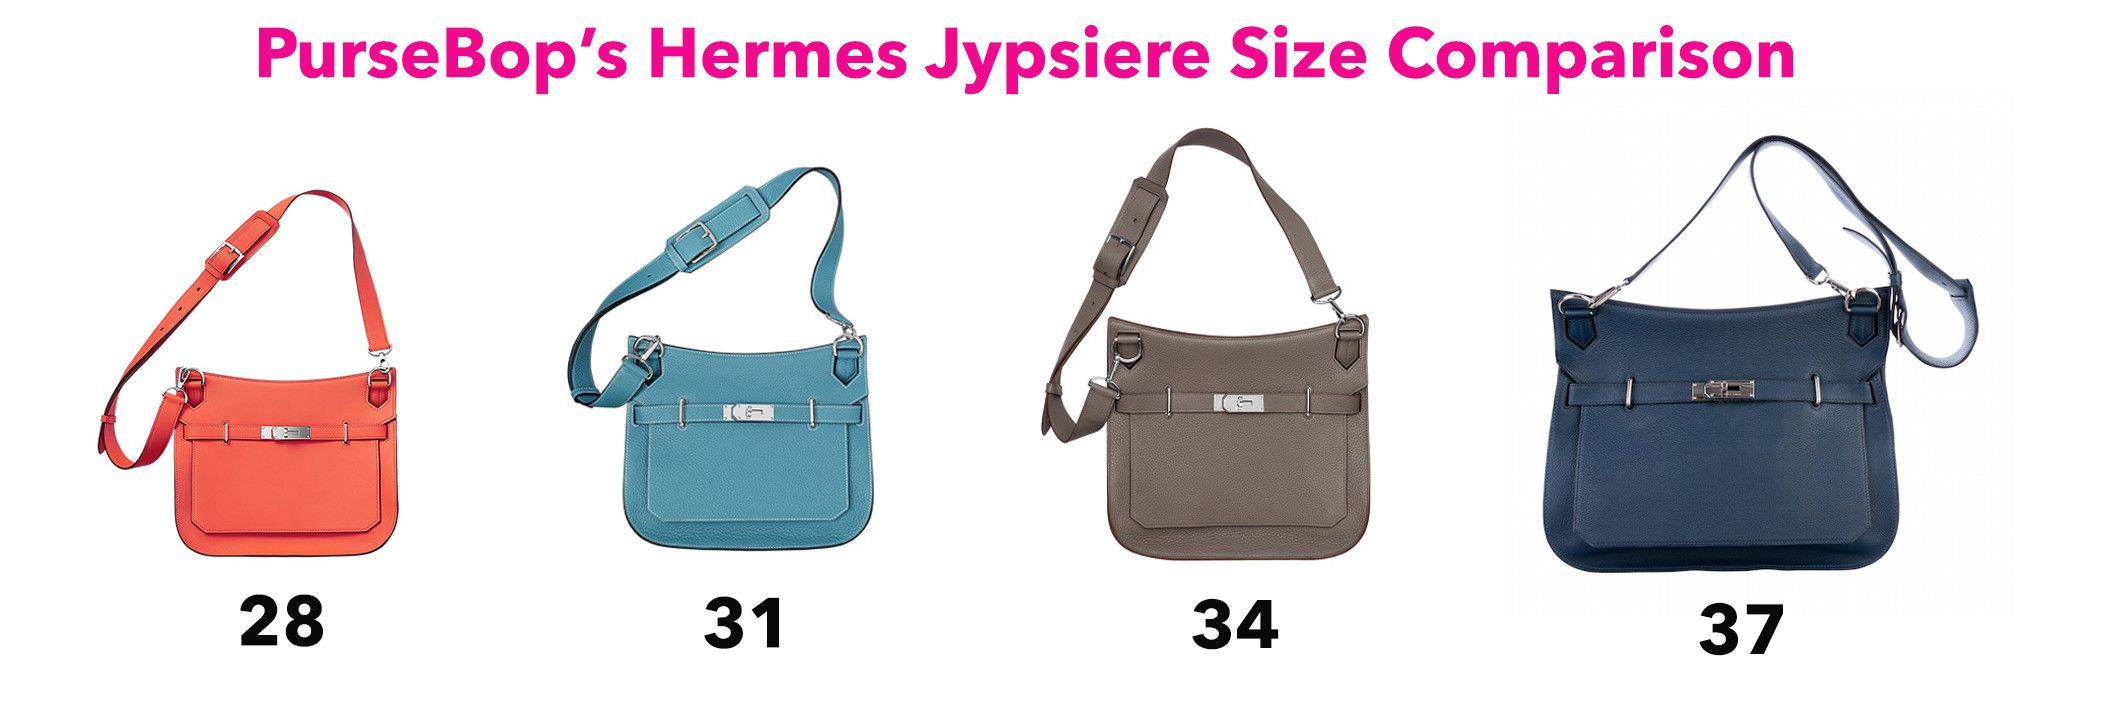 Introducing the Hermès Mini Jypsiere - PurseBop